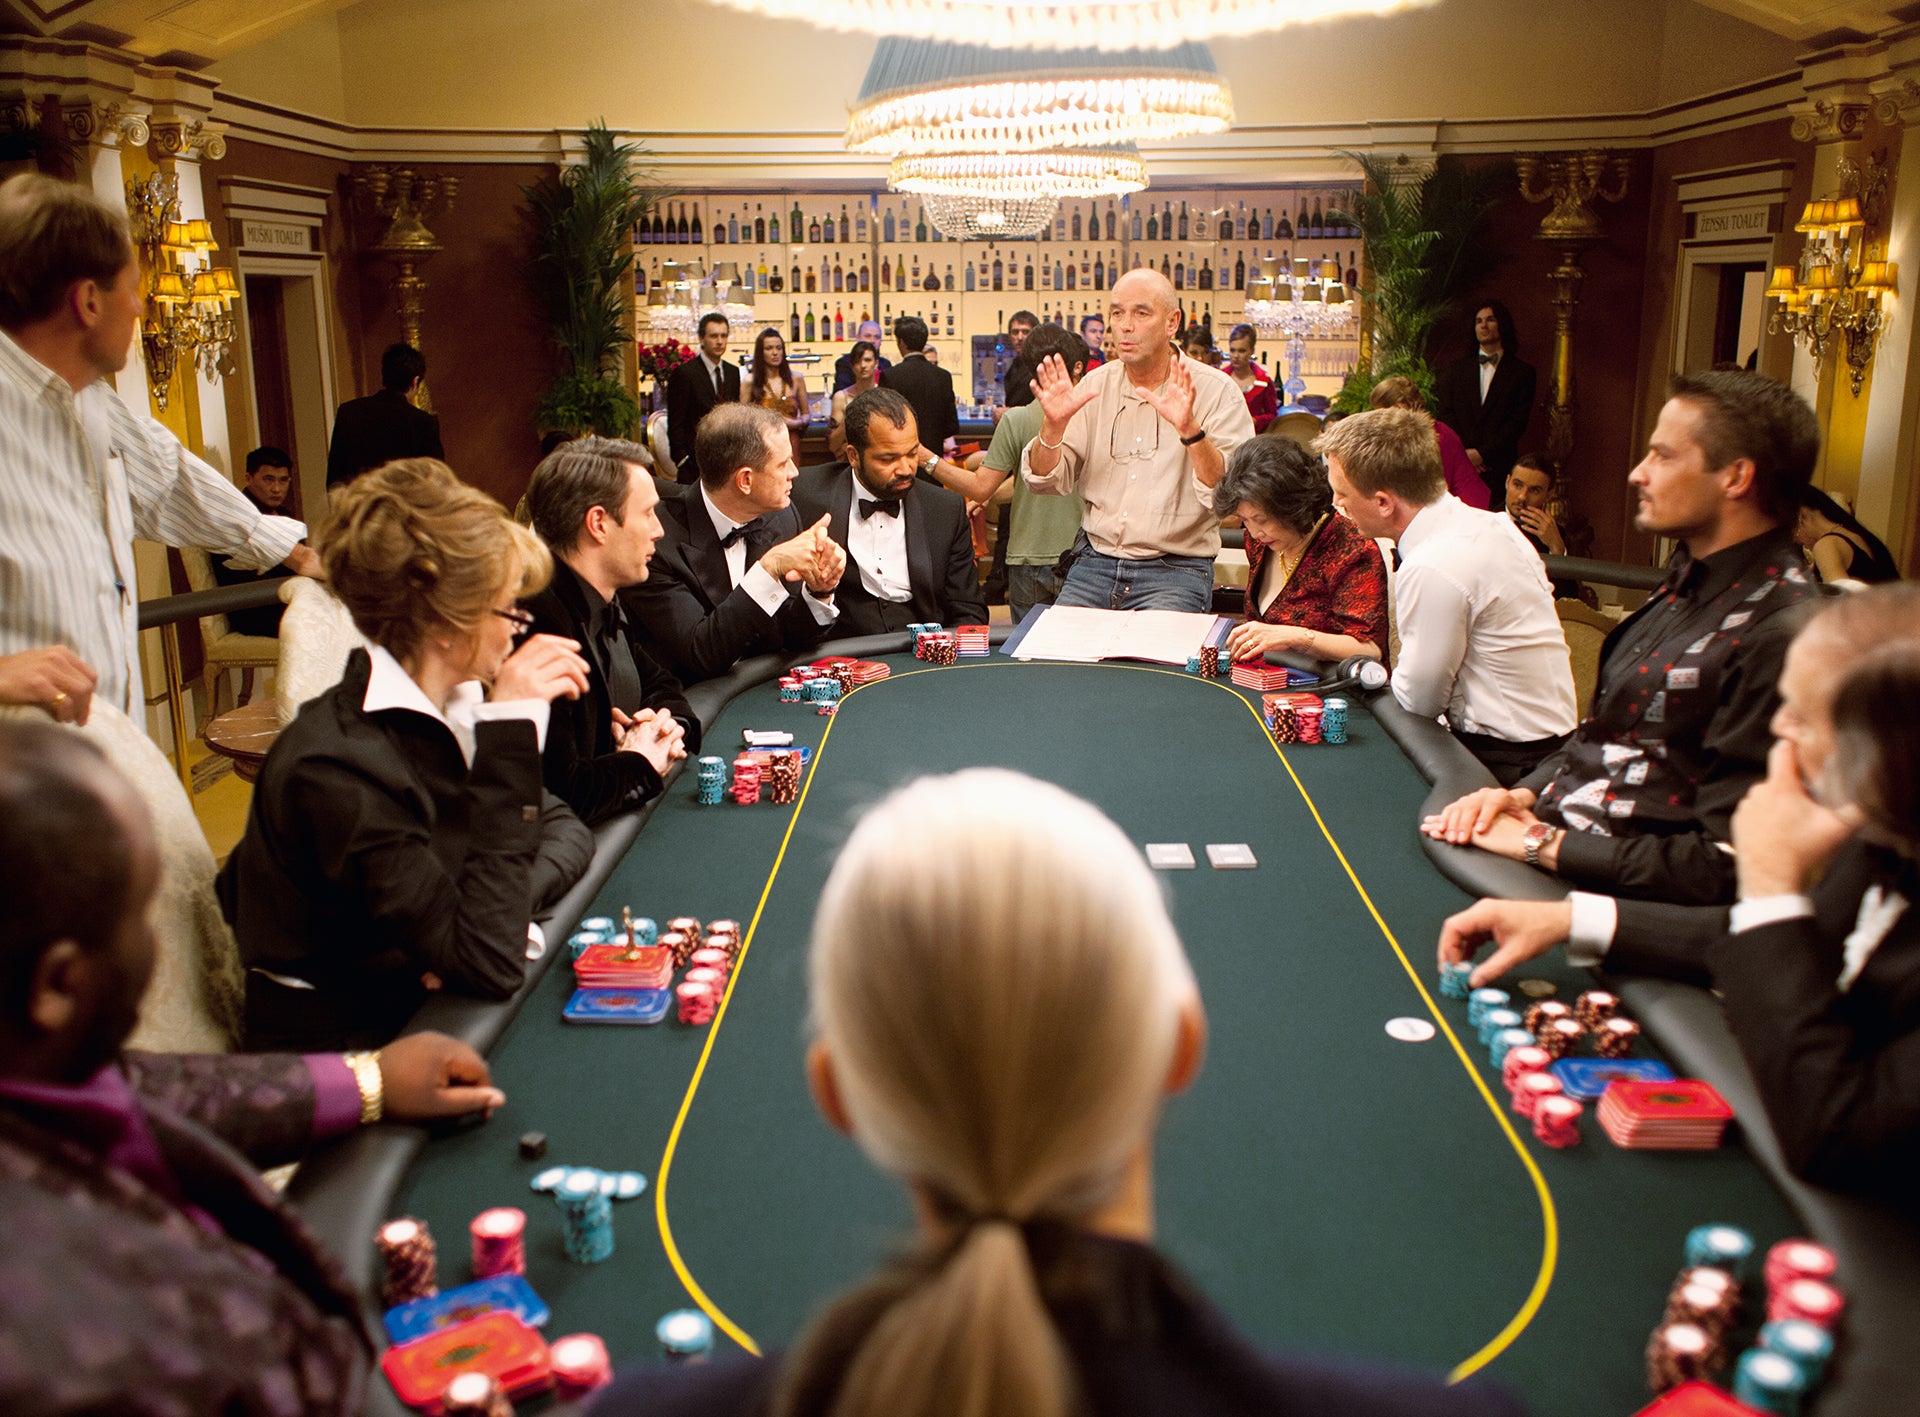 Official 007 James Bond Casino Royale Poker Chip Coasters 